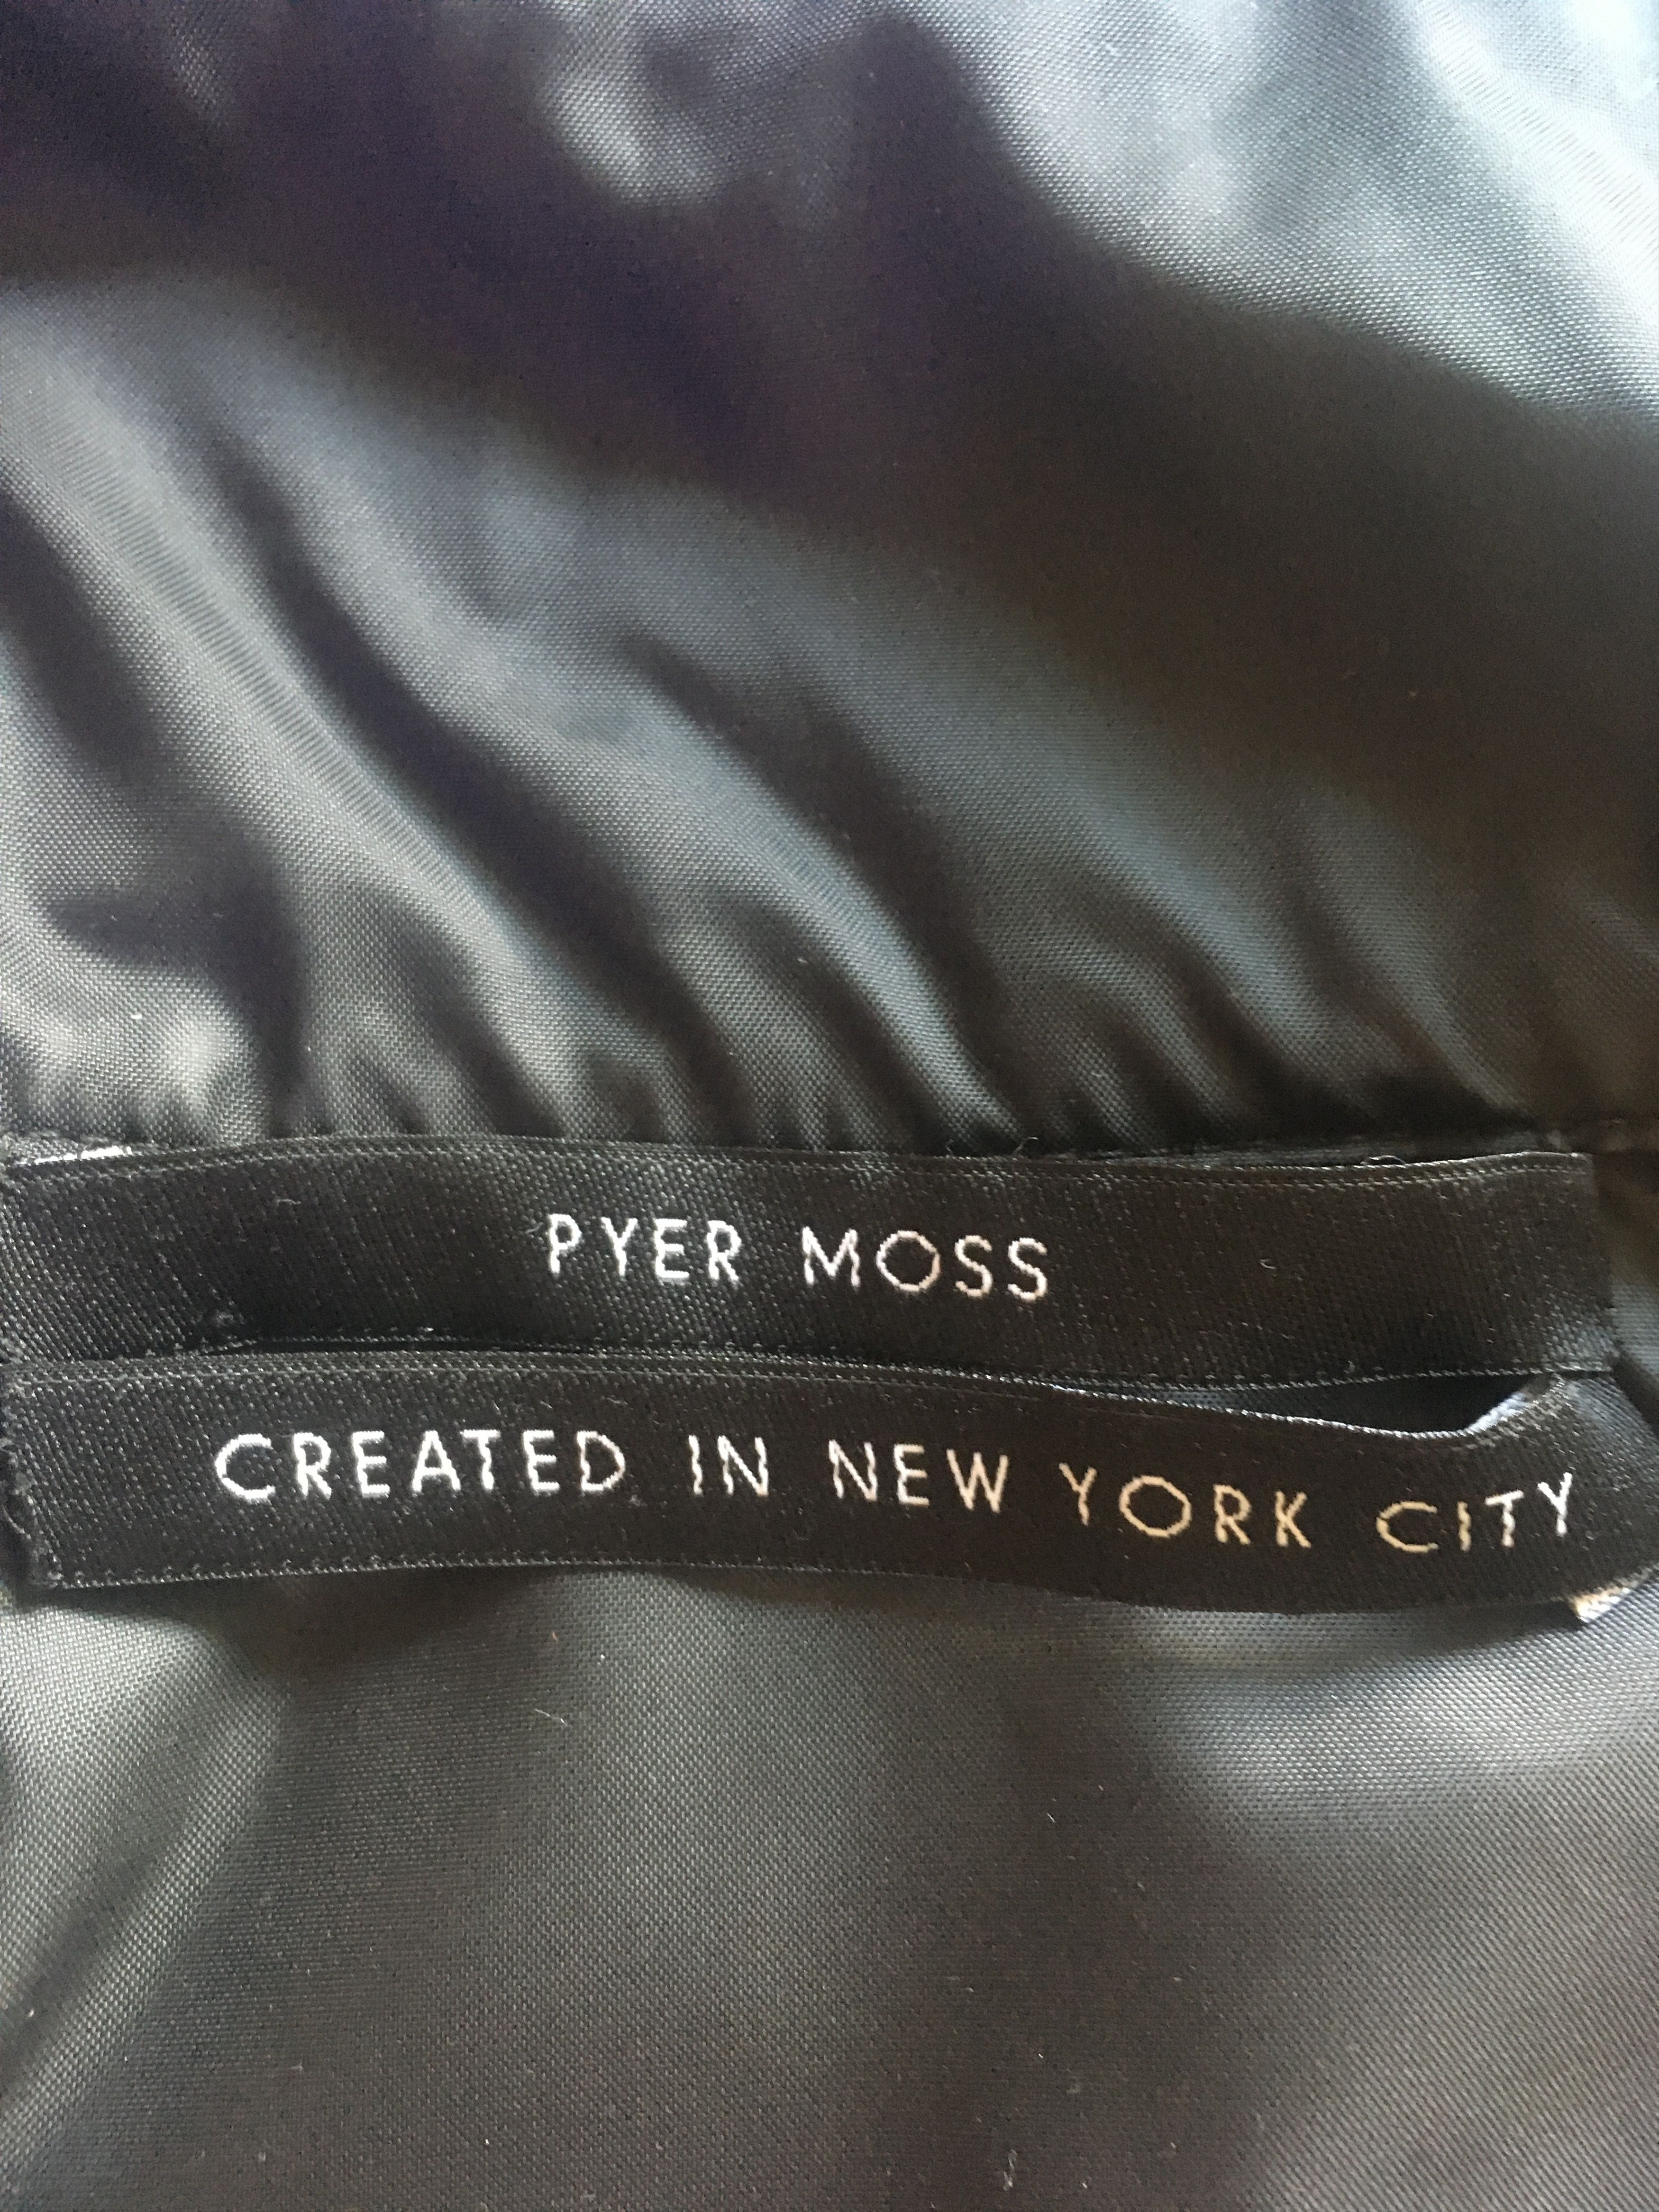 Pyer Moss Pyer Moss Black and Purple Track Jacket/ Tracksuit Jacket Size US XS / EU 42 / 0 - 4 Thumbnail